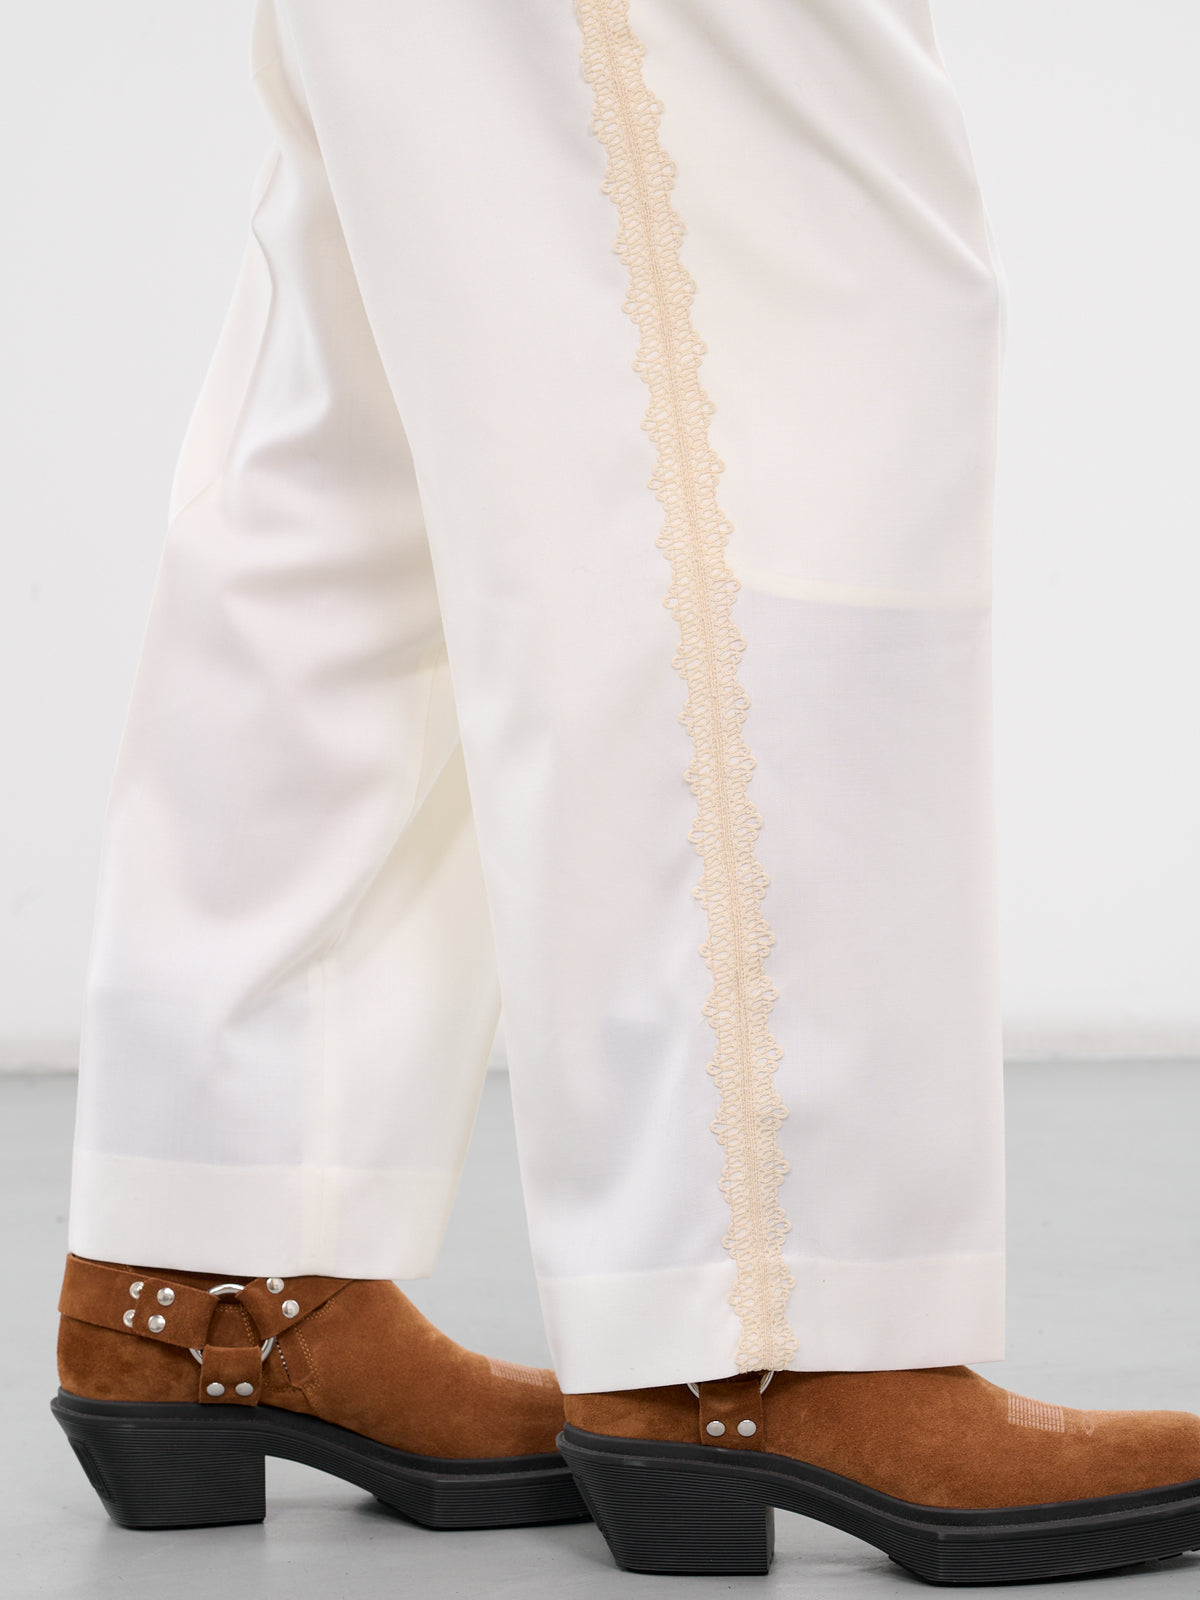 Lacework McNab Trousers (MRS24BT035-IVORY)